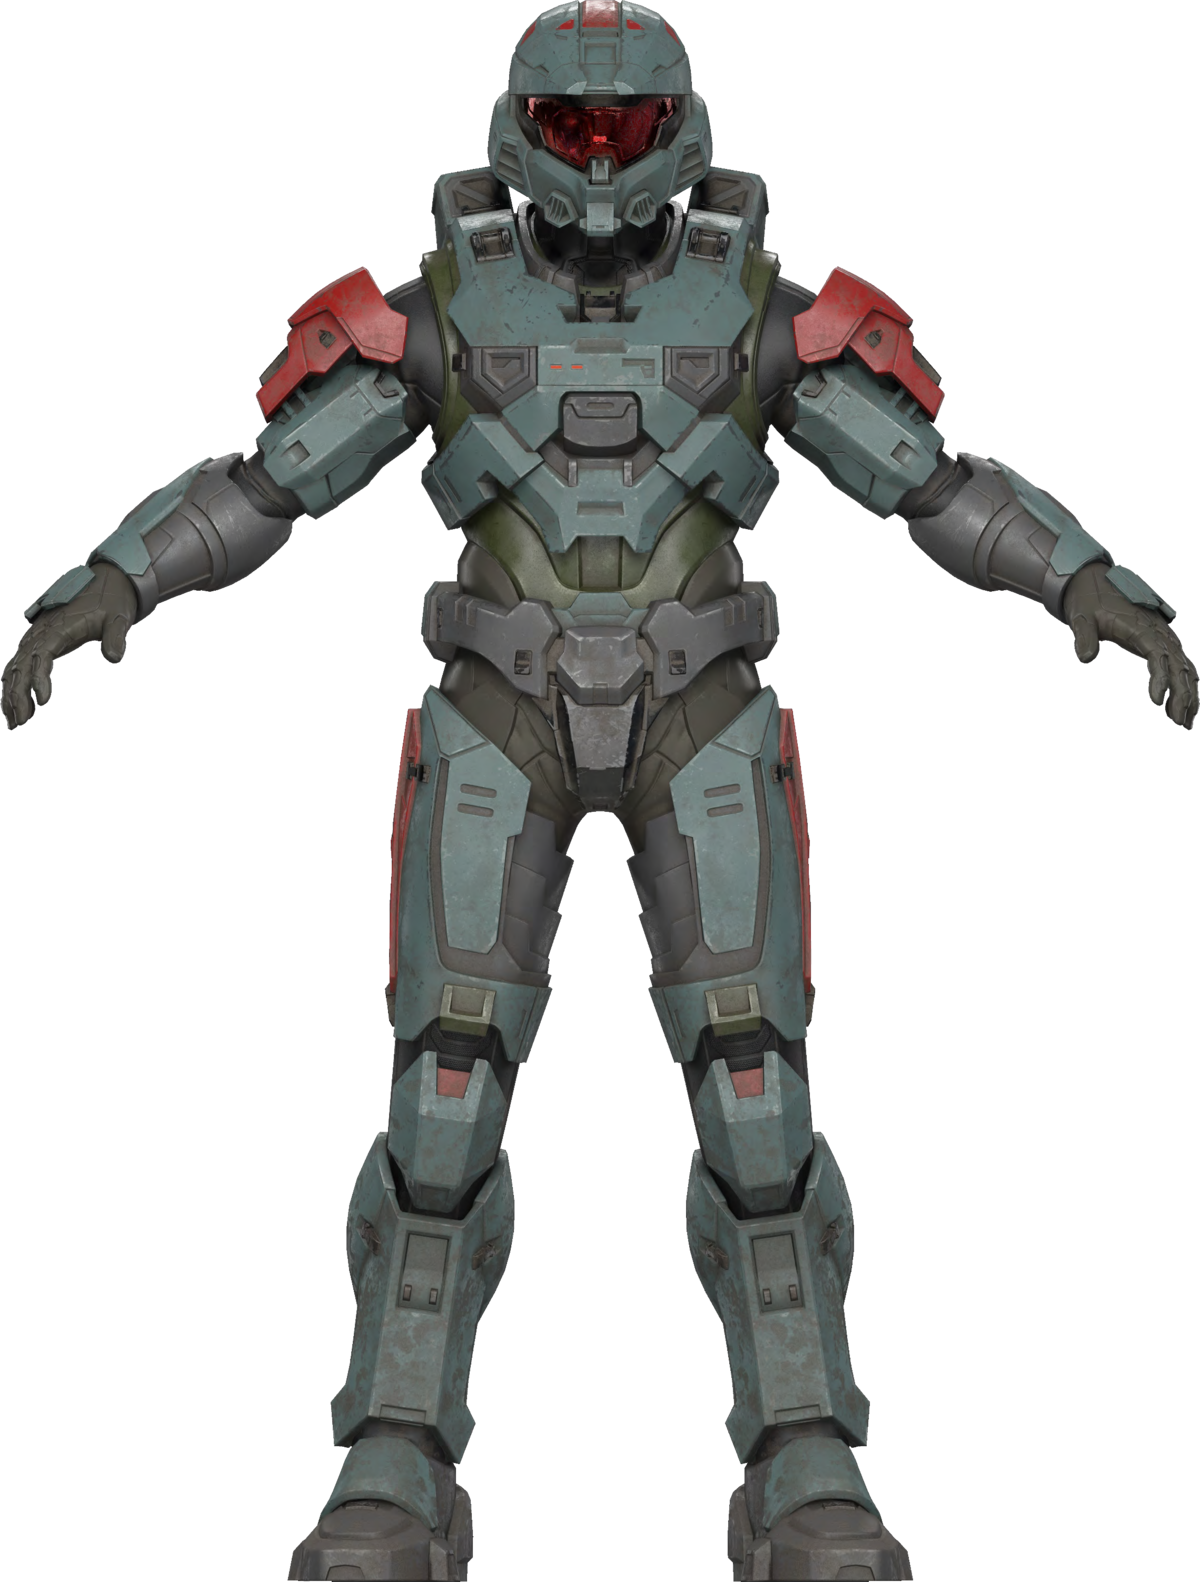 Spartan-IV Mjolnir GEN3 armor.